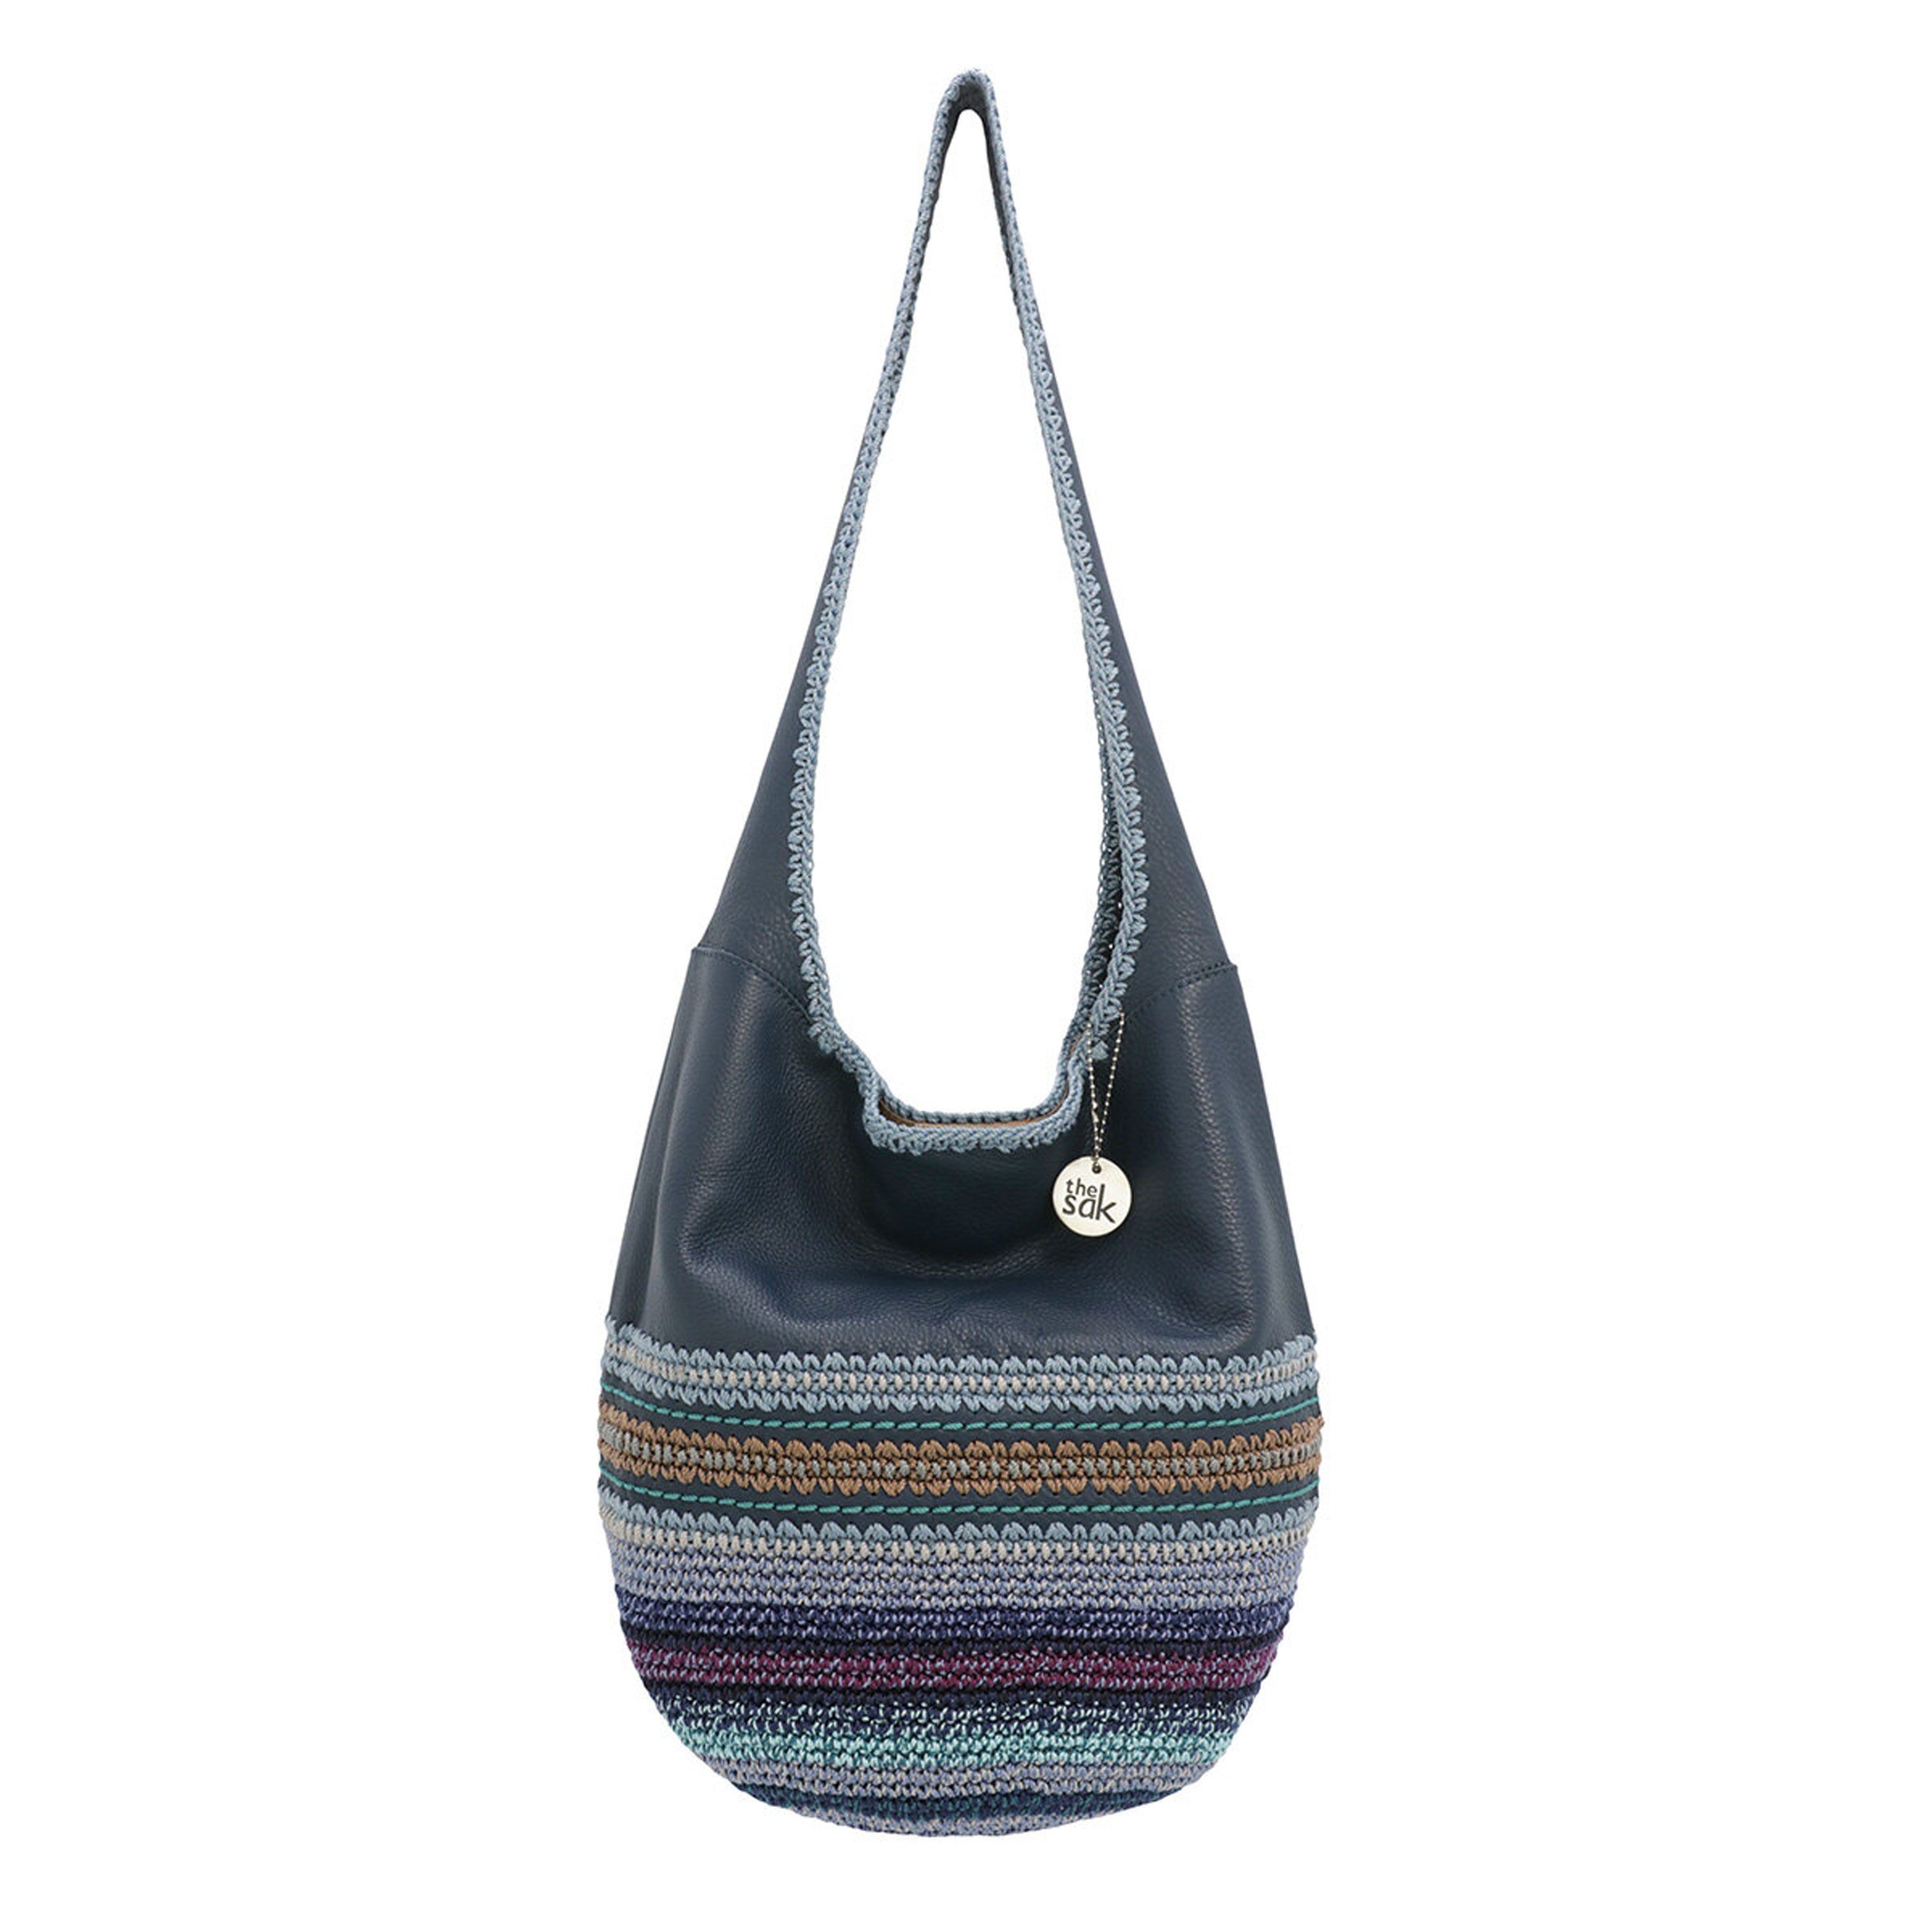 120 Hobo | Crochet Shoulder Bag – The Sak